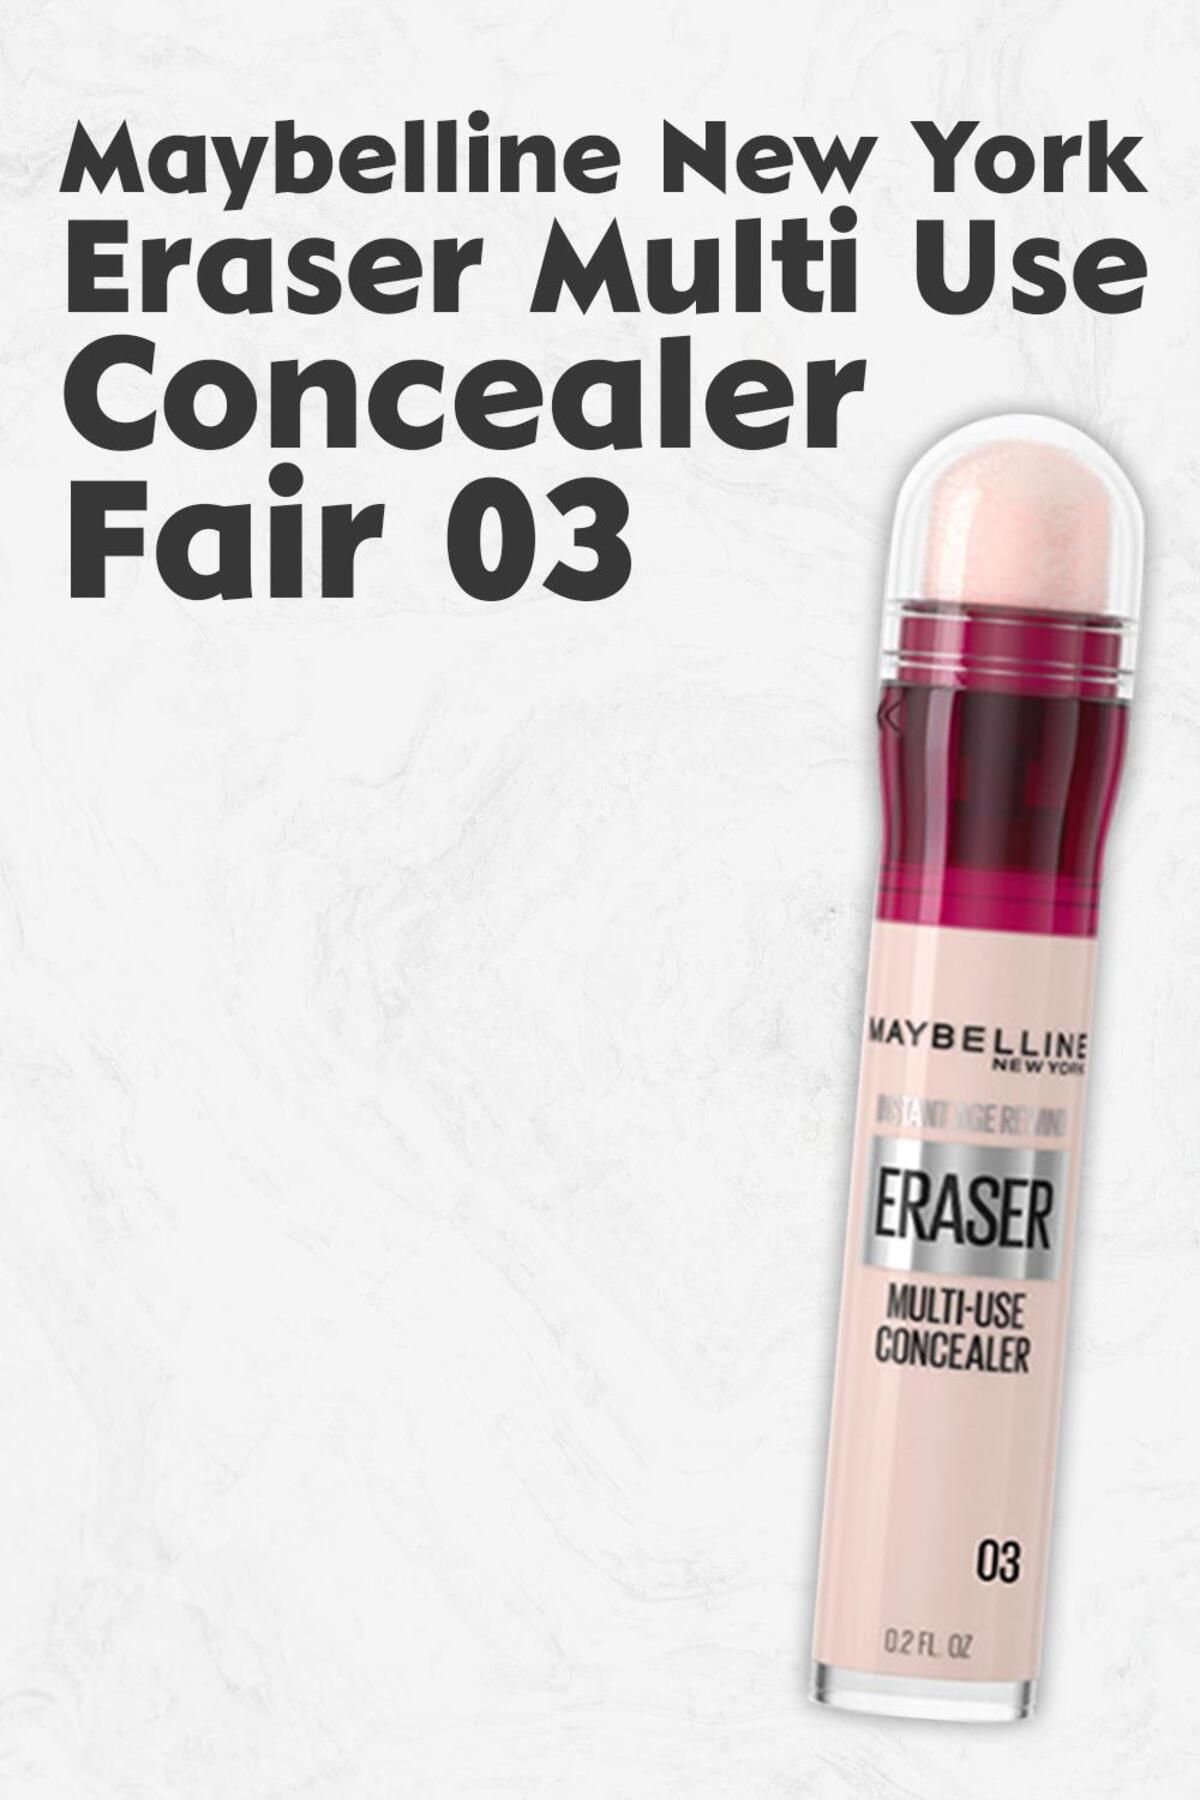 Maybelline New York Eraser Multi Use Concealer 03 Fair